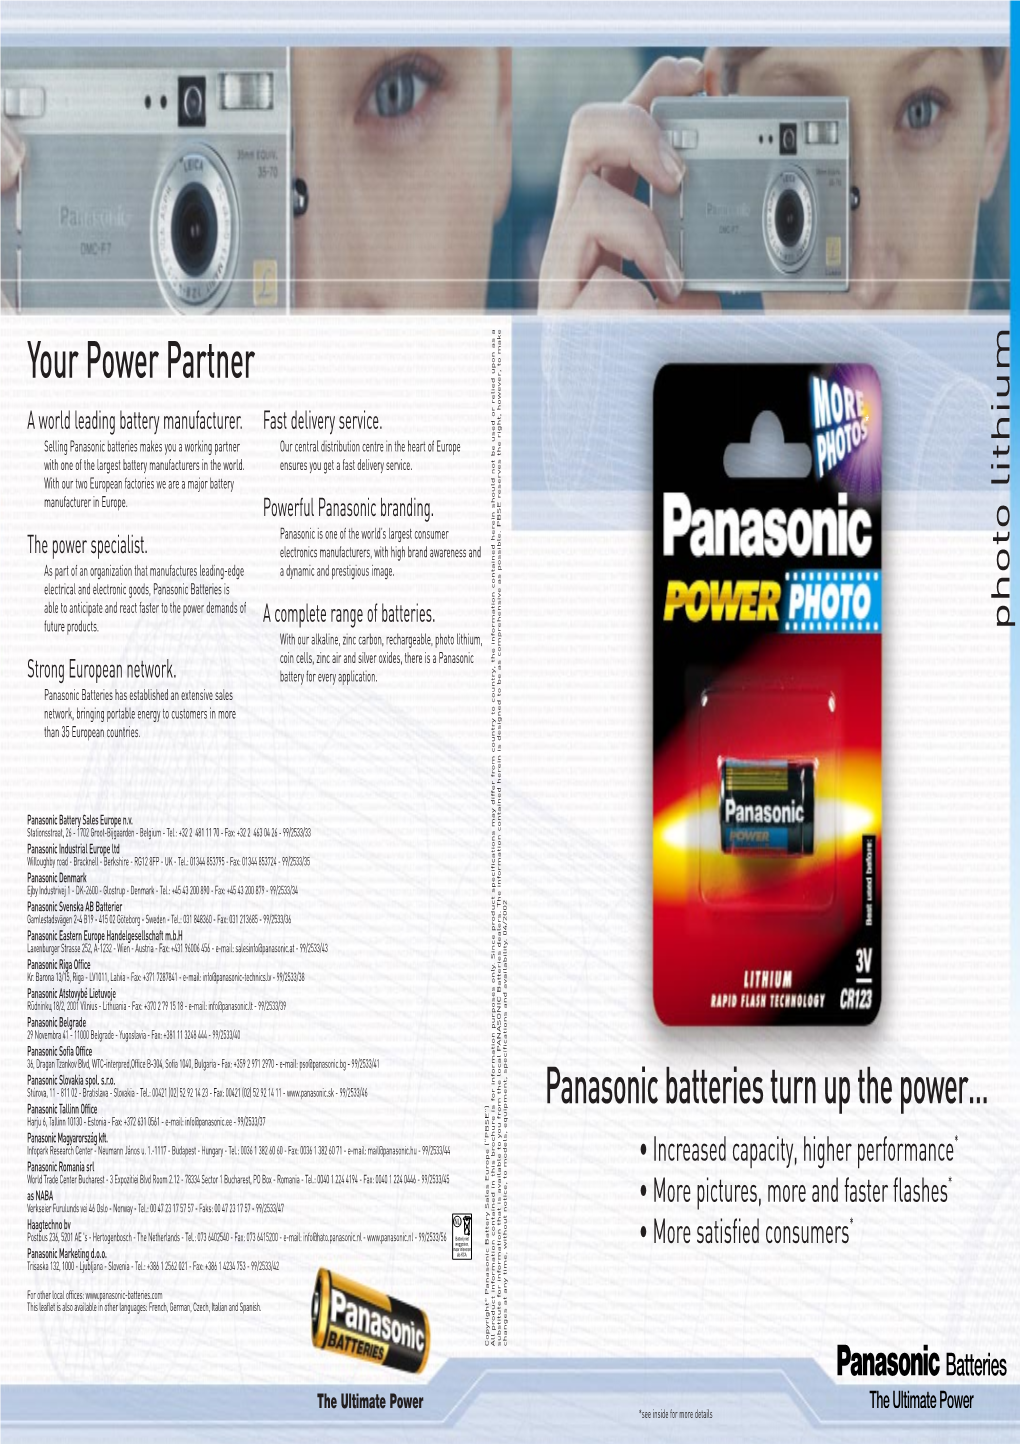 Photo Lithium Panasonic Batteries Turn up the Power… Your Power Partner